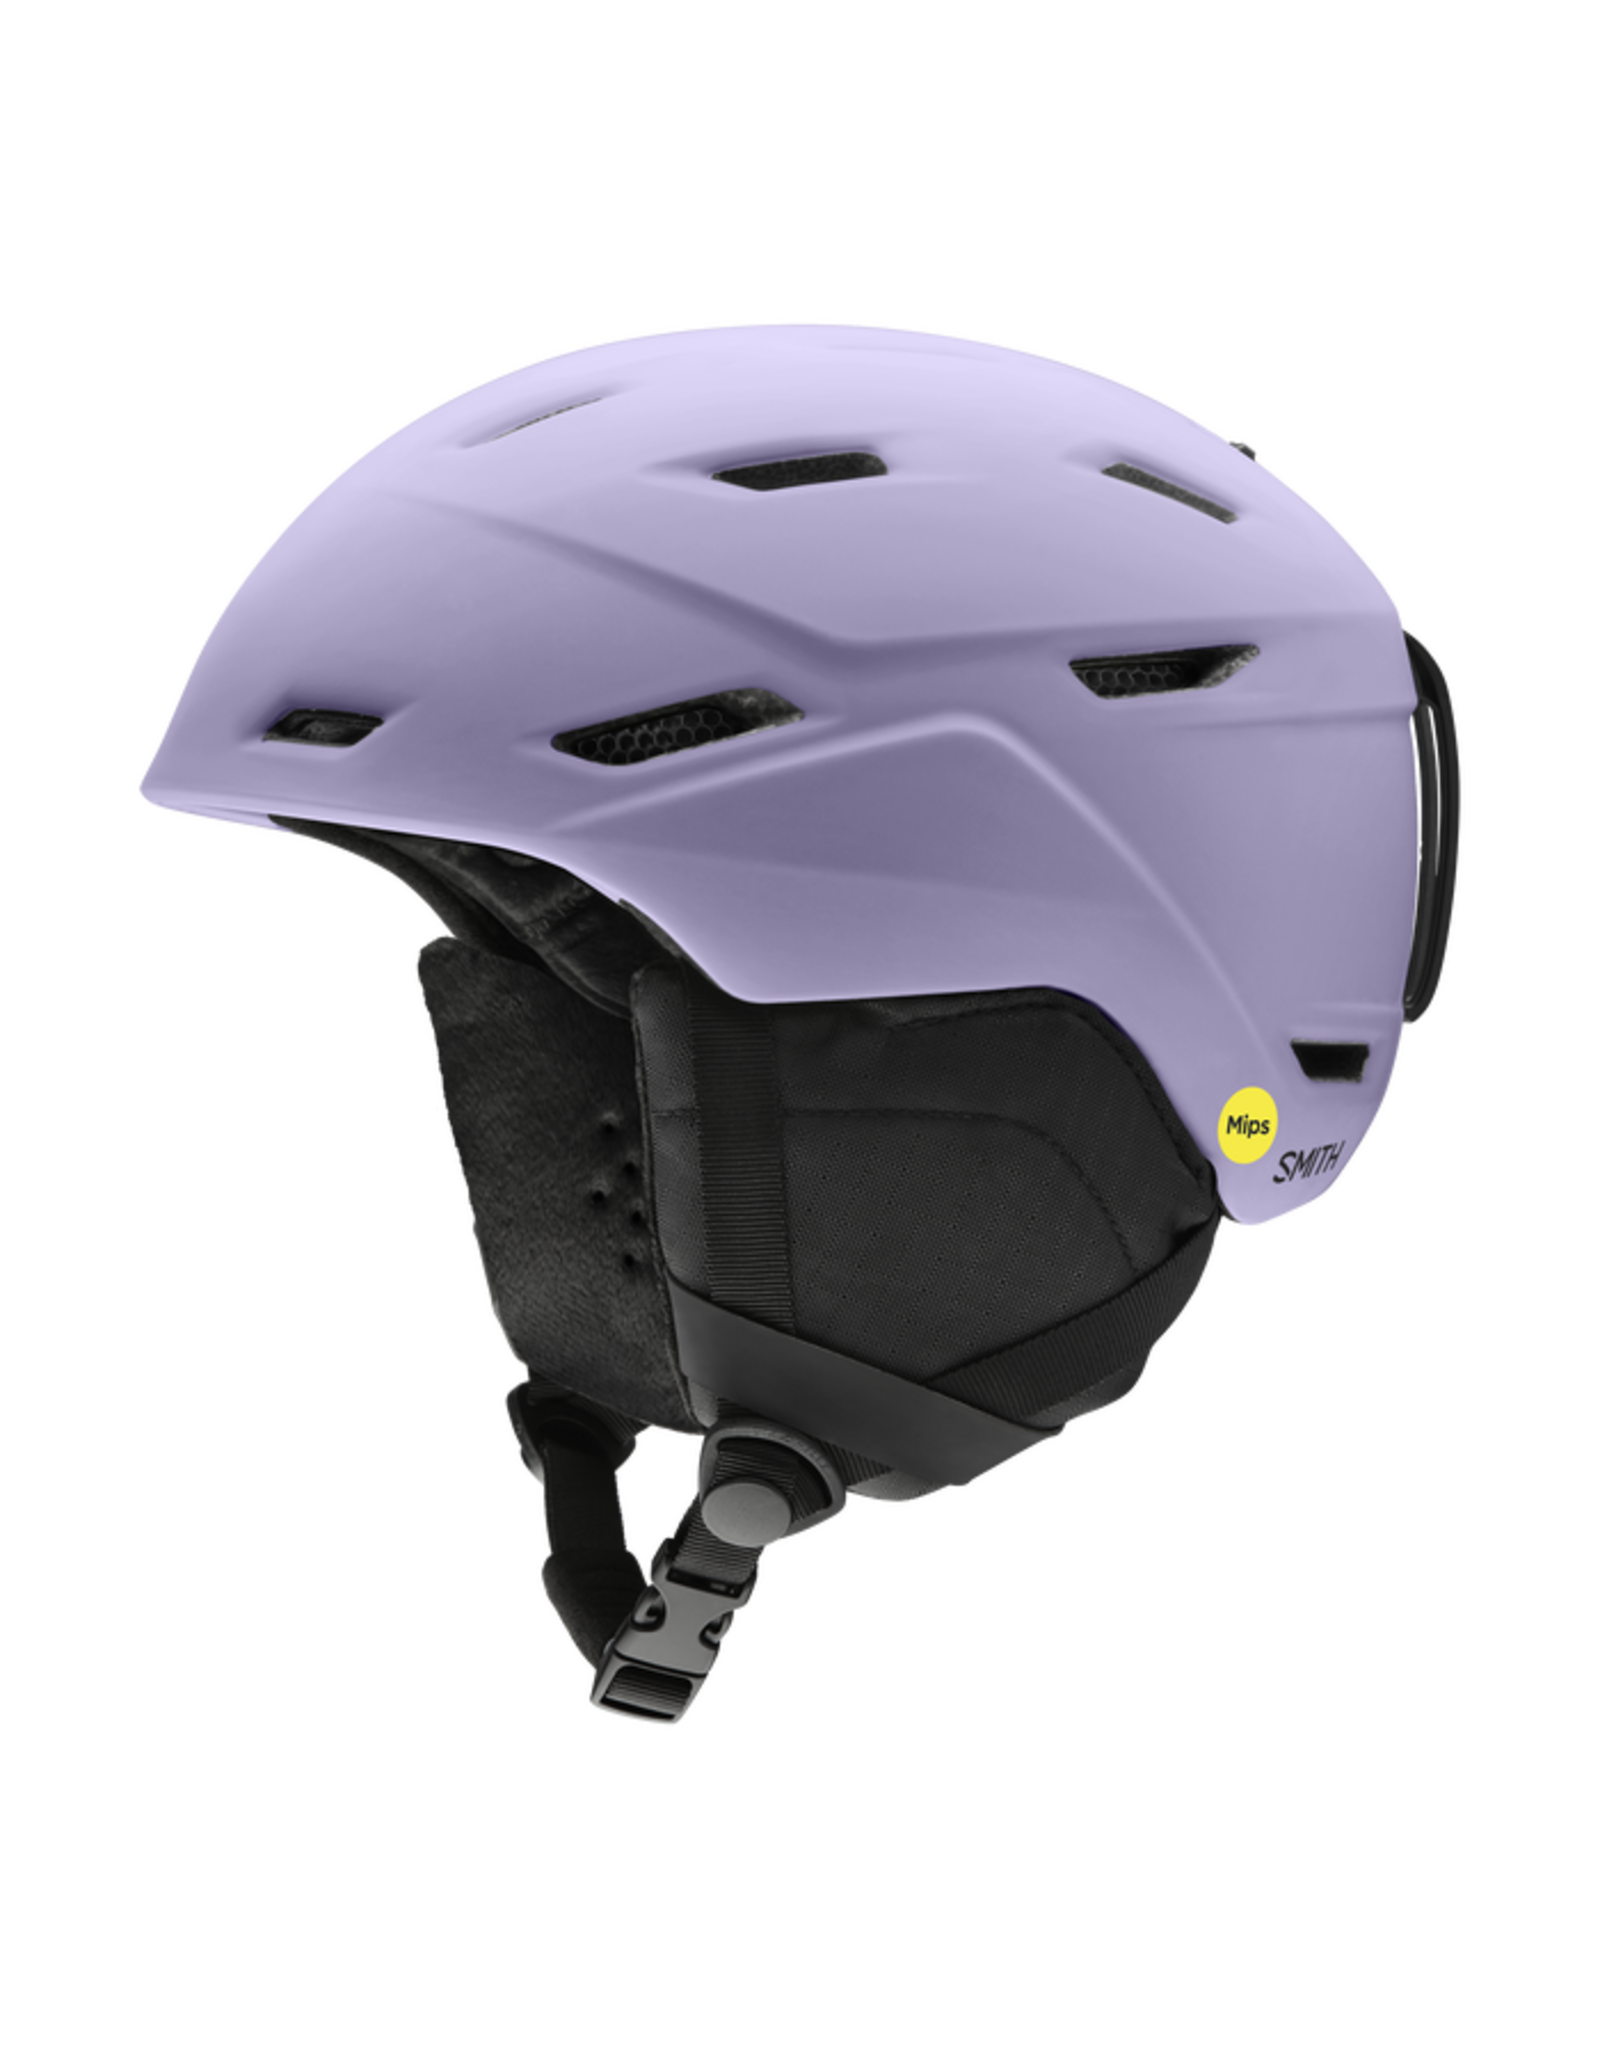 smith optics Smith Mirage mips helmet - Matte Lilac - Small 51-55cm